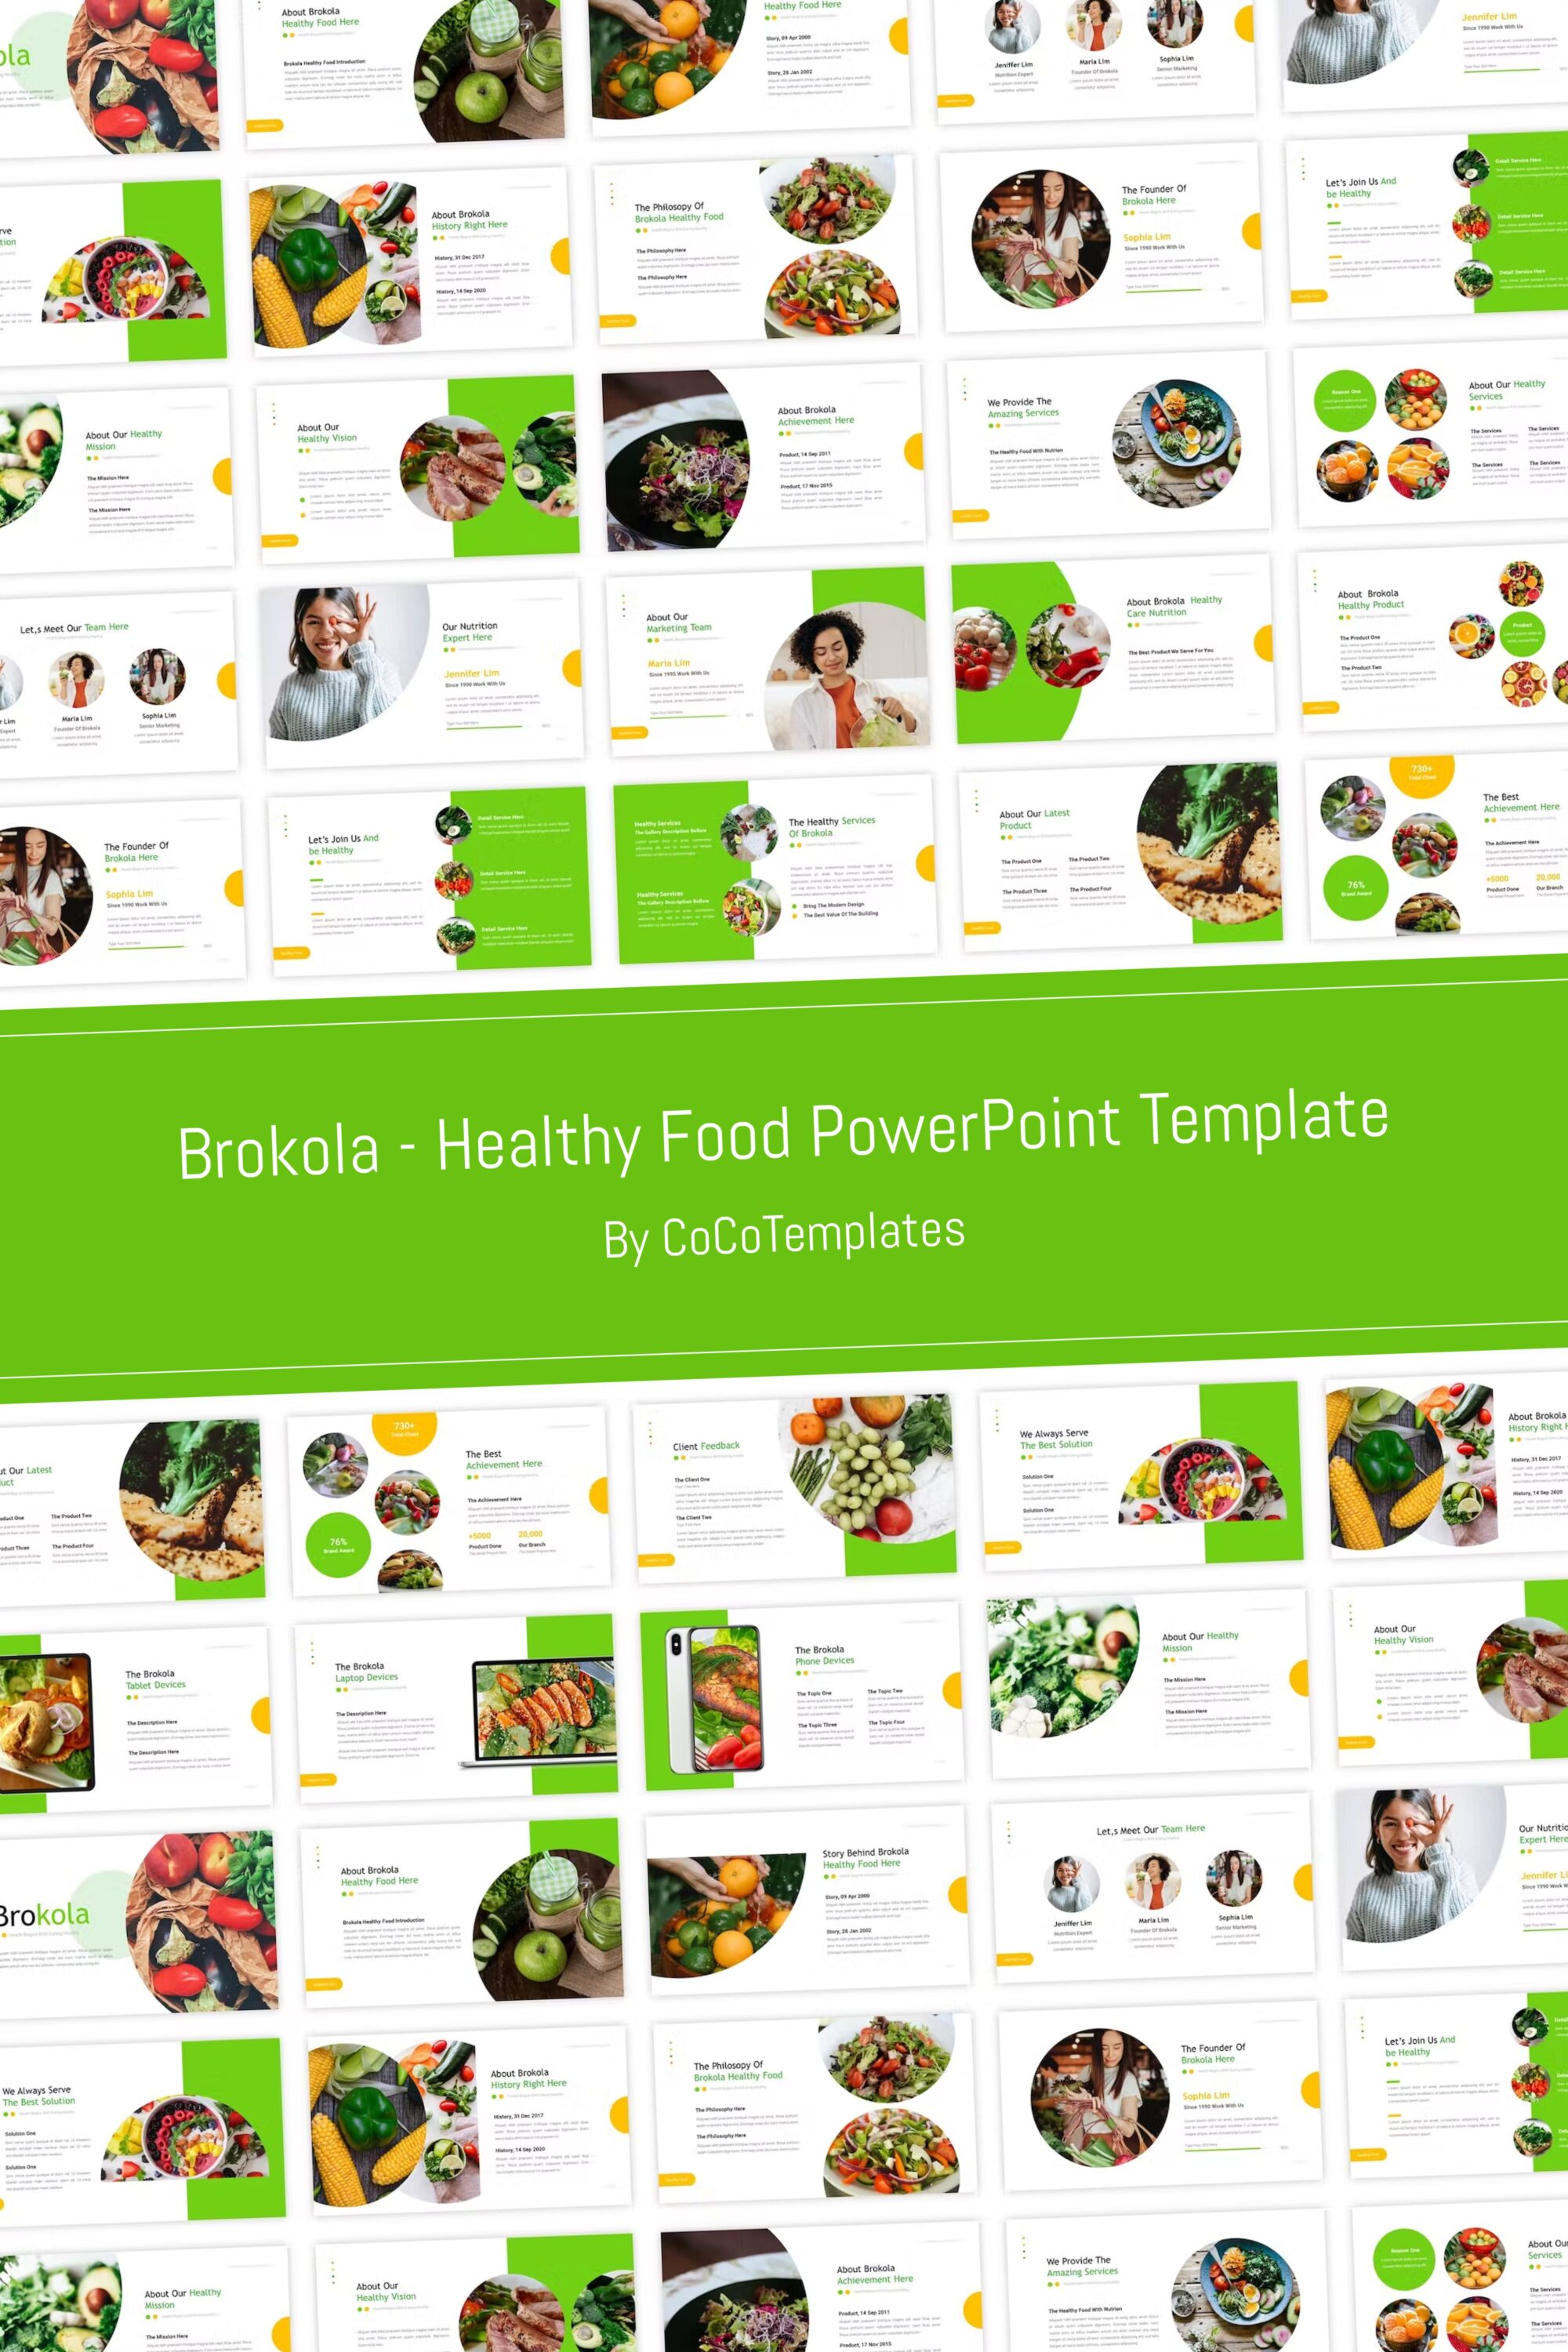 Brokola Healthy Food PowerPoint Template - pinterest image preview.